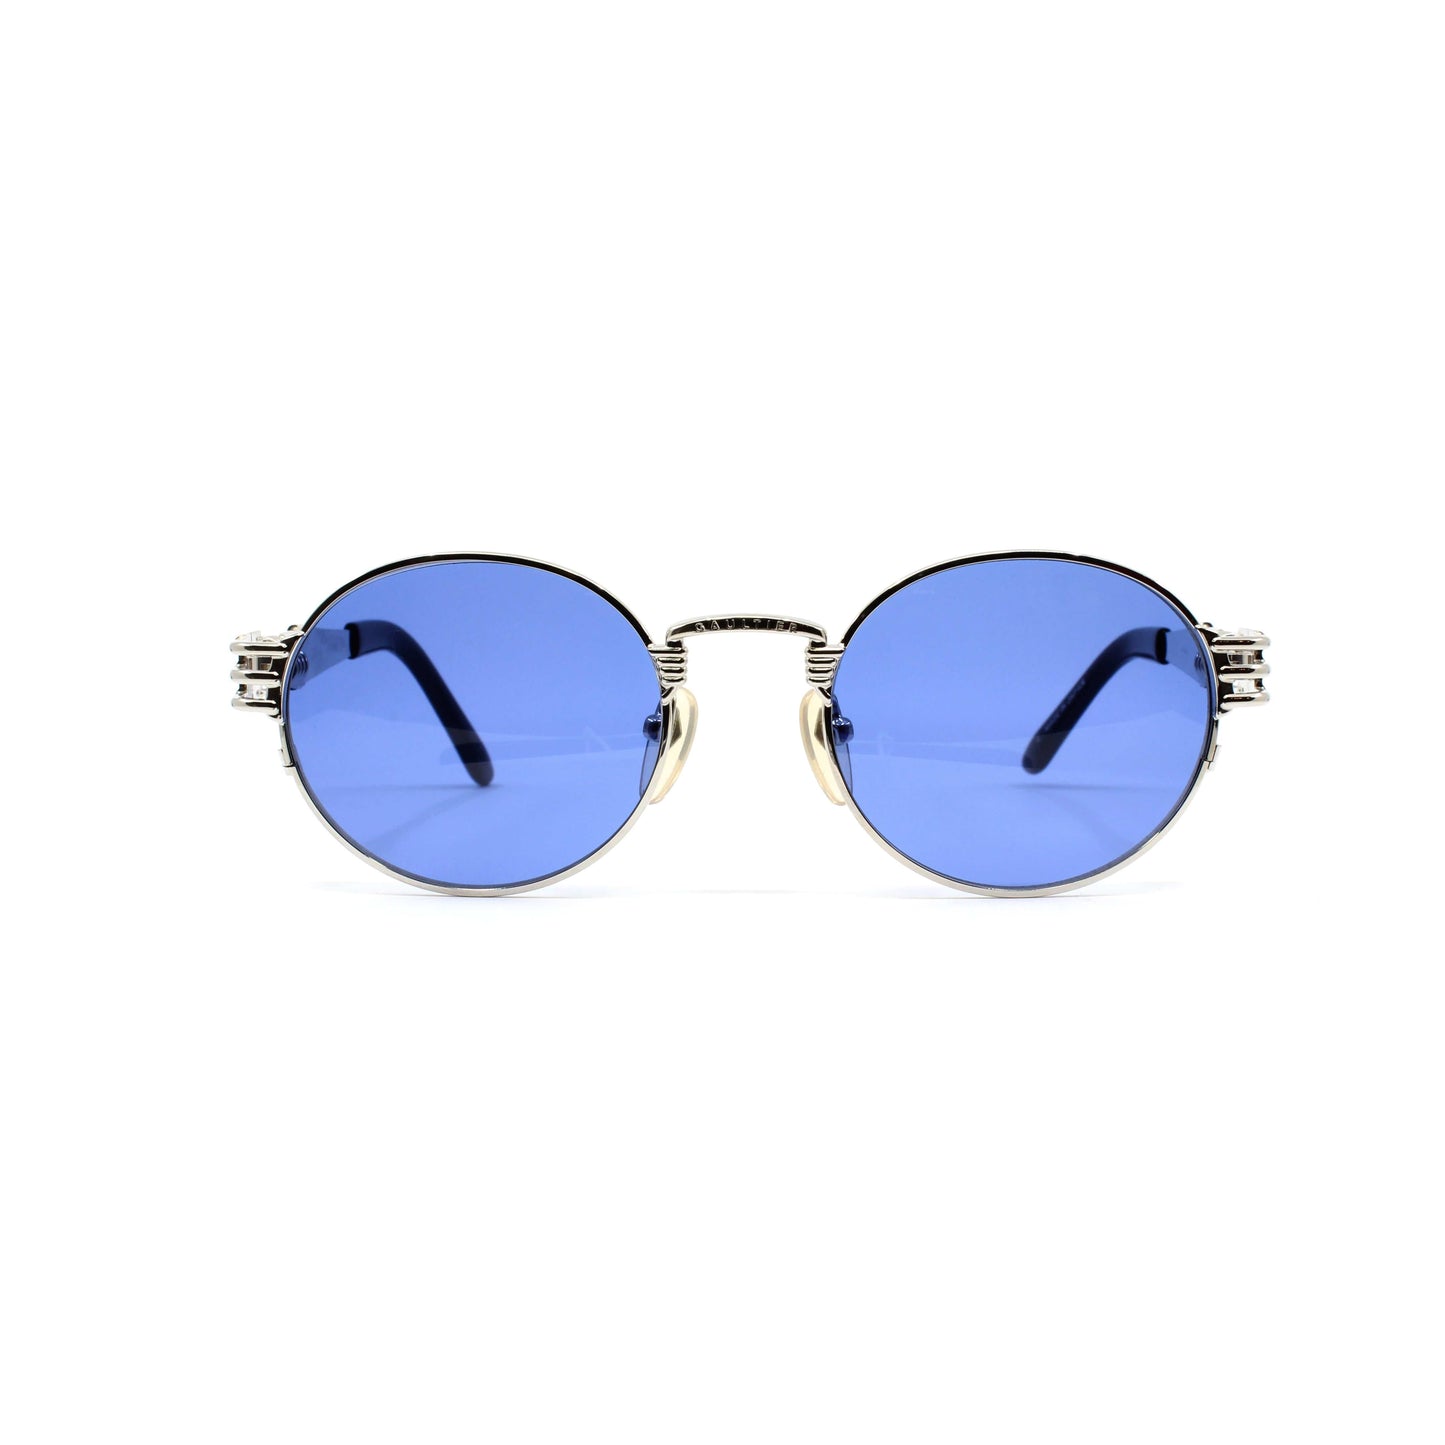 Silver Vintage Jean Paul Gaultier 56-6106 Sunglasses RSTKD Vintage